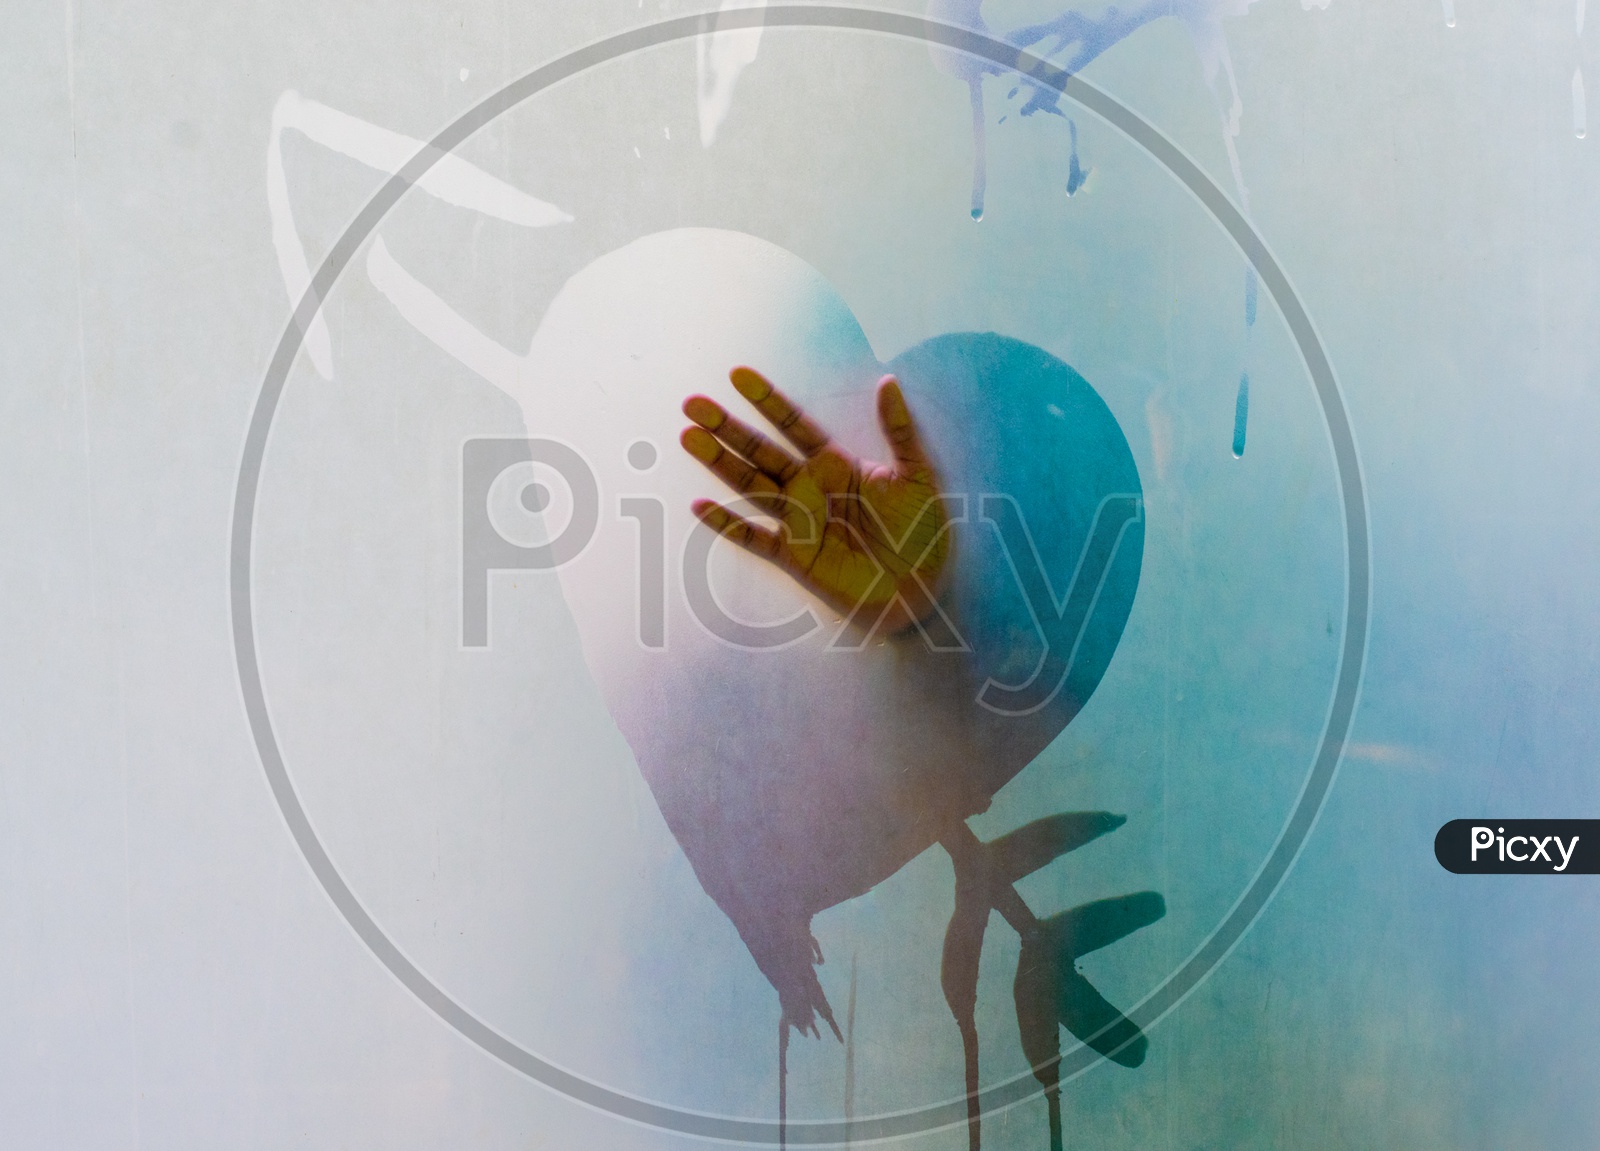 Lady creating a heart symbol on a foggy glass